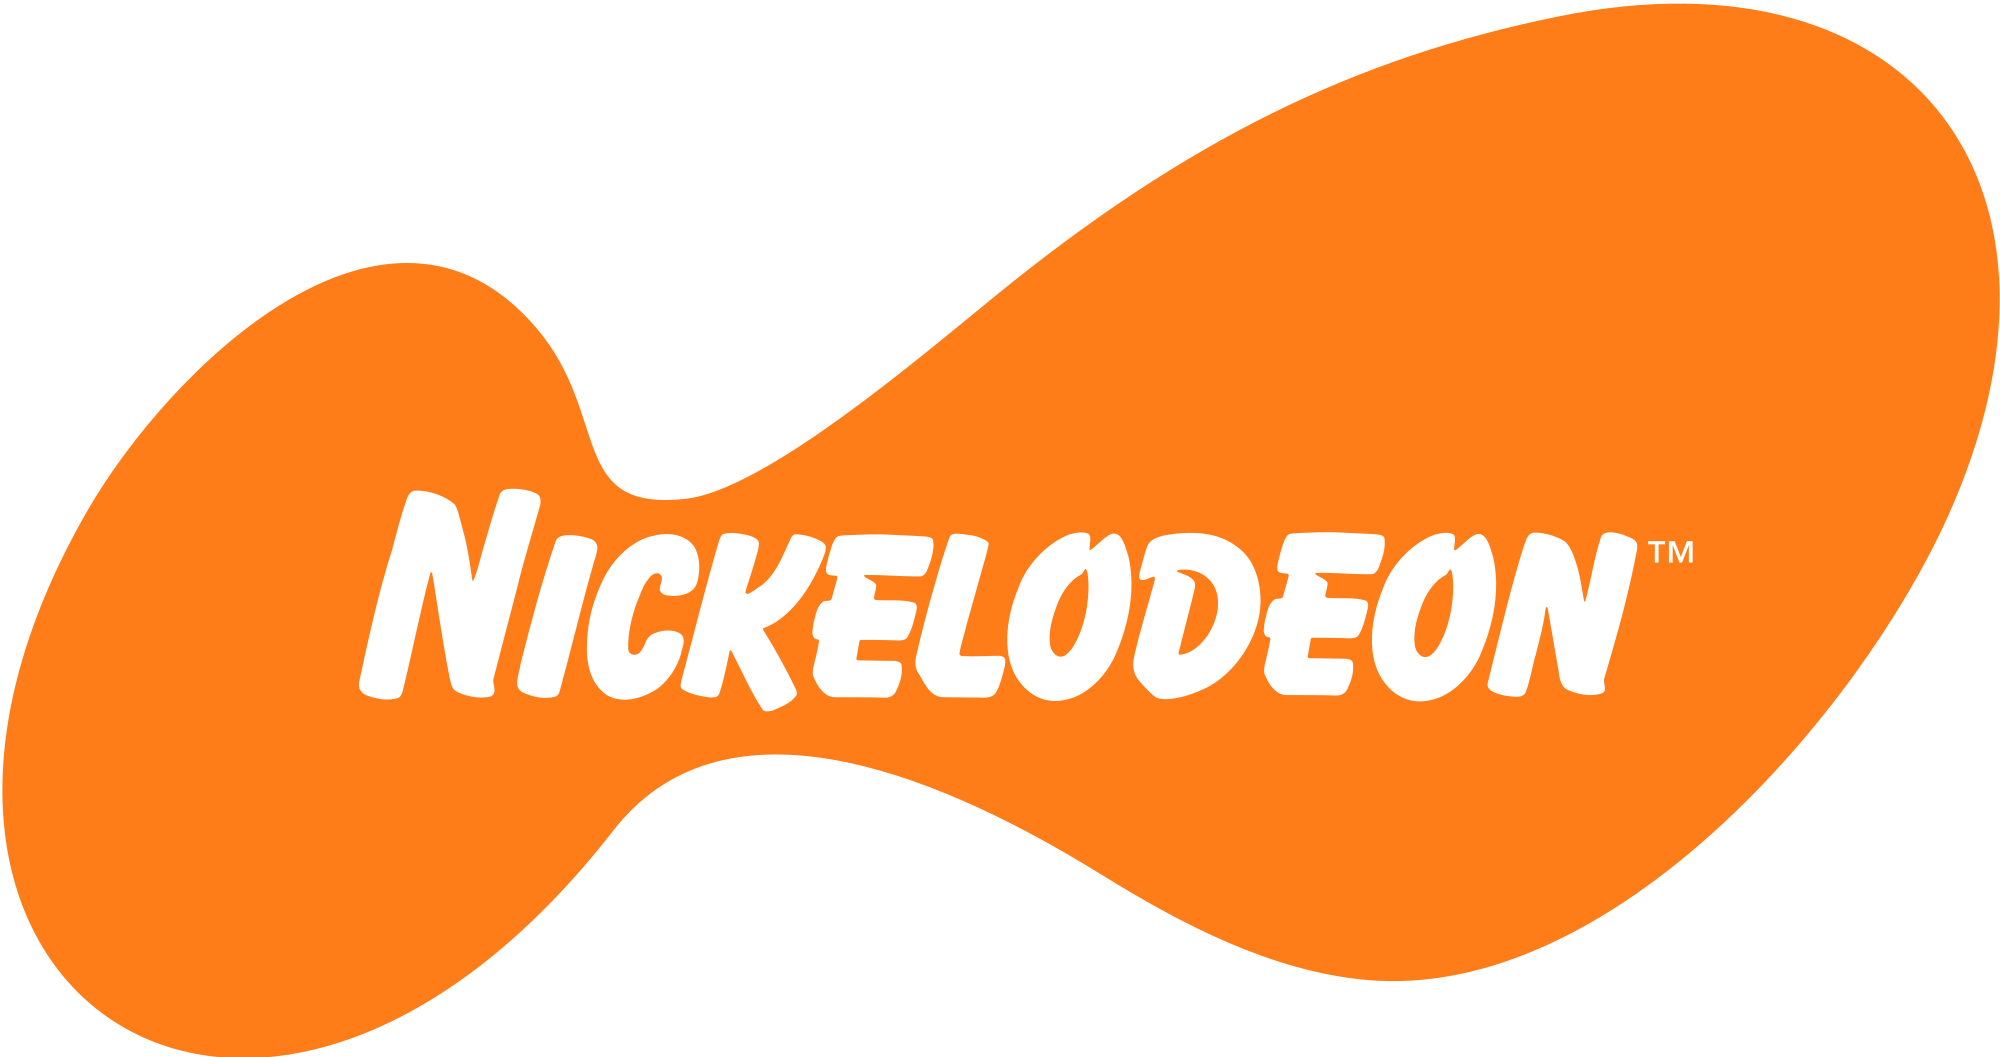 Телеканал никелодеон. Телеканал Nickelodeon. Nickelodeon эмблема. Телеканал Никелодеон логотип. Надпись Nickelodeon.